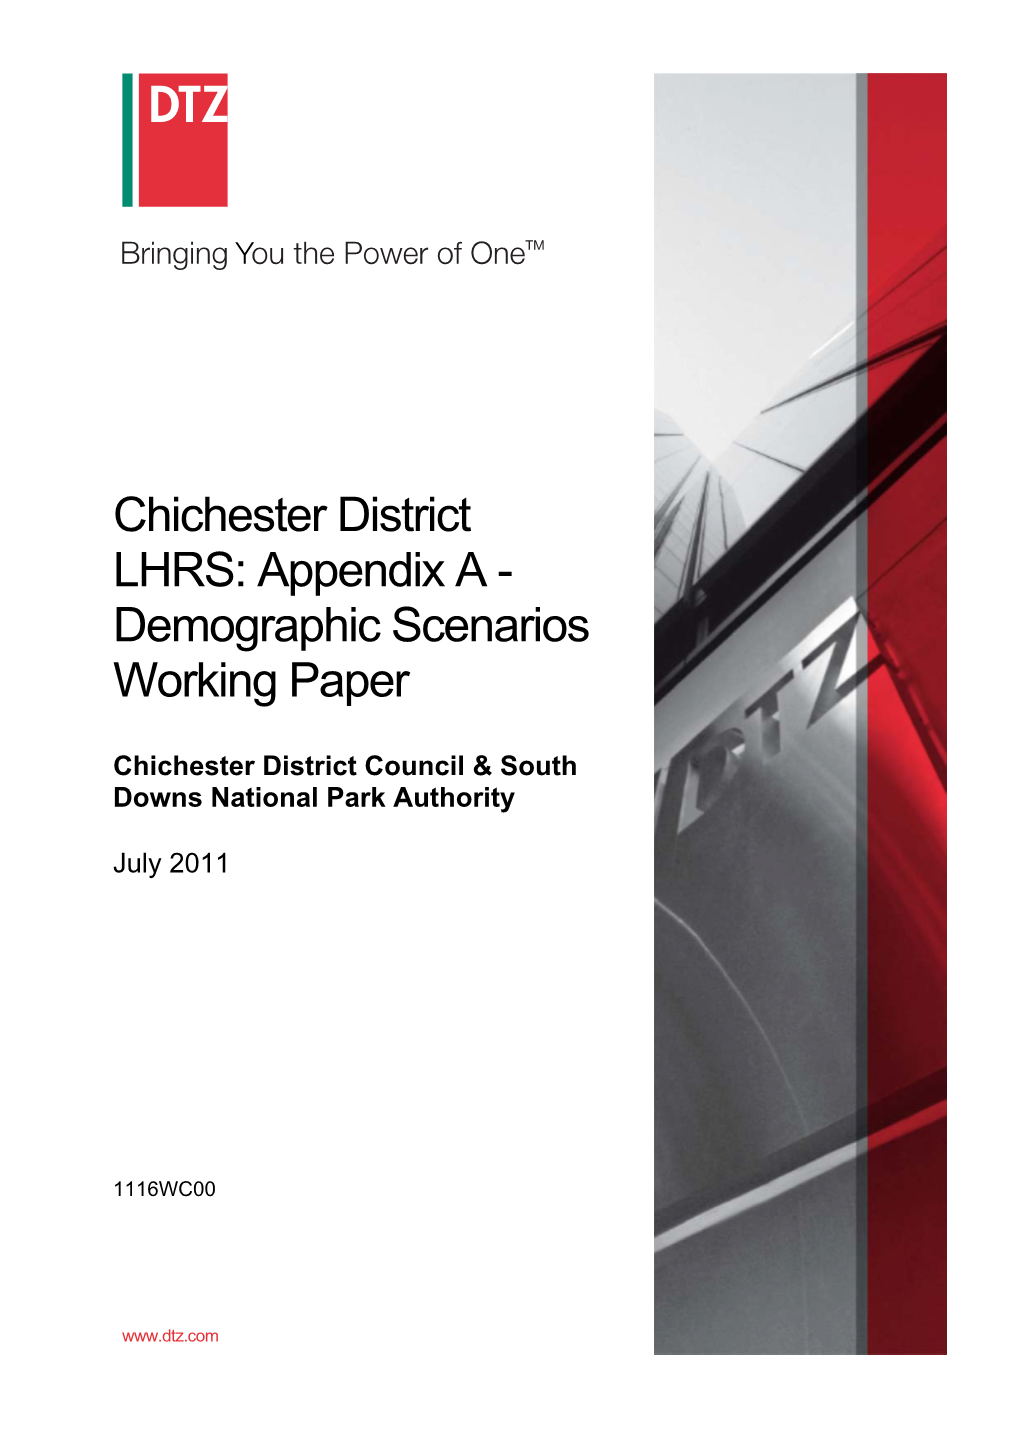 Chichester District LHRS: Appendix a - Demographic Scenarios Working Paper